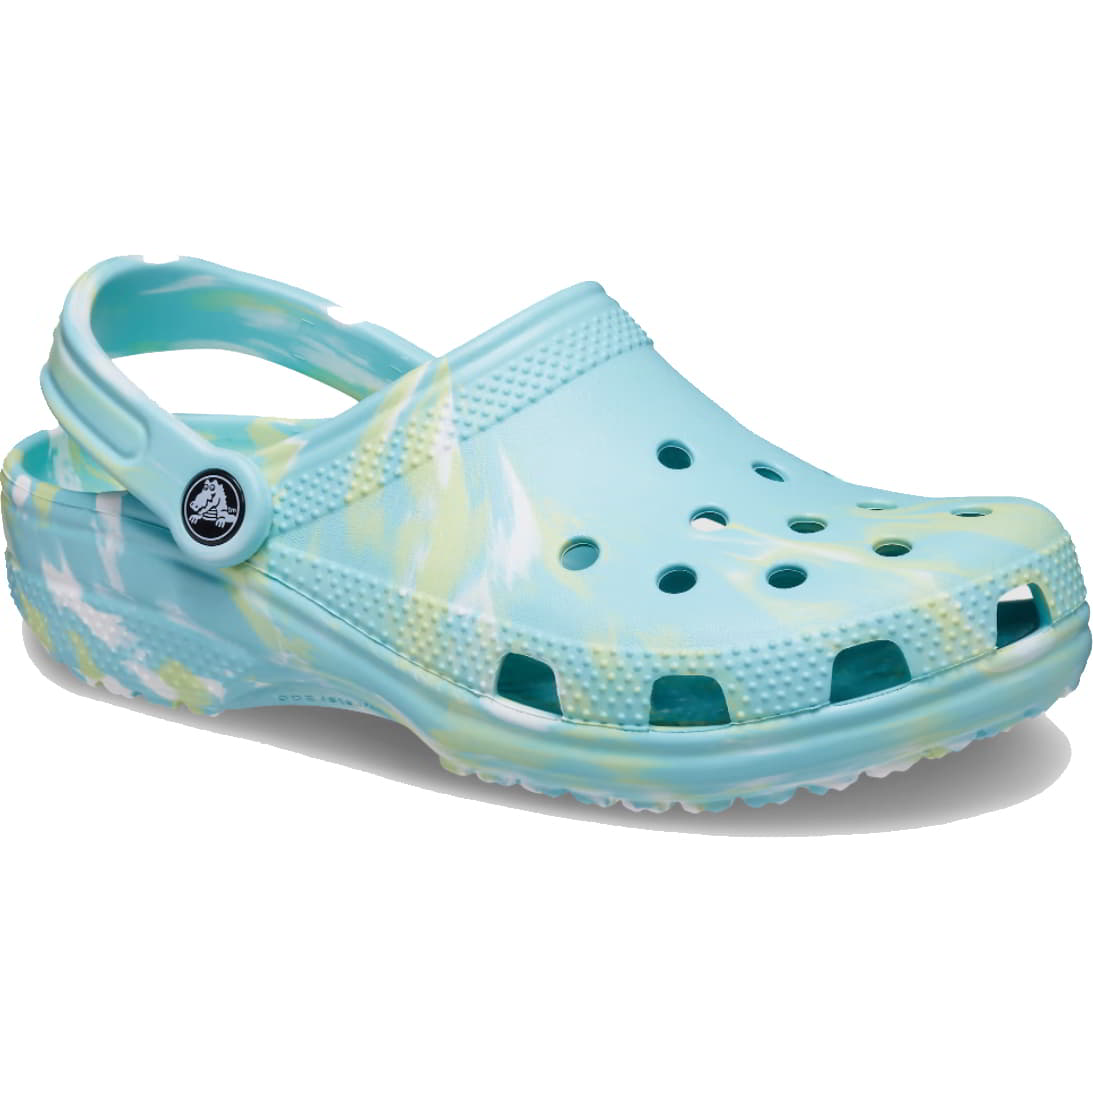 Crocs Womens Classic Clog Marble Slip On Vegan Shoes Sandals - UK 7 / EU 39-40 W9 Blue 2951